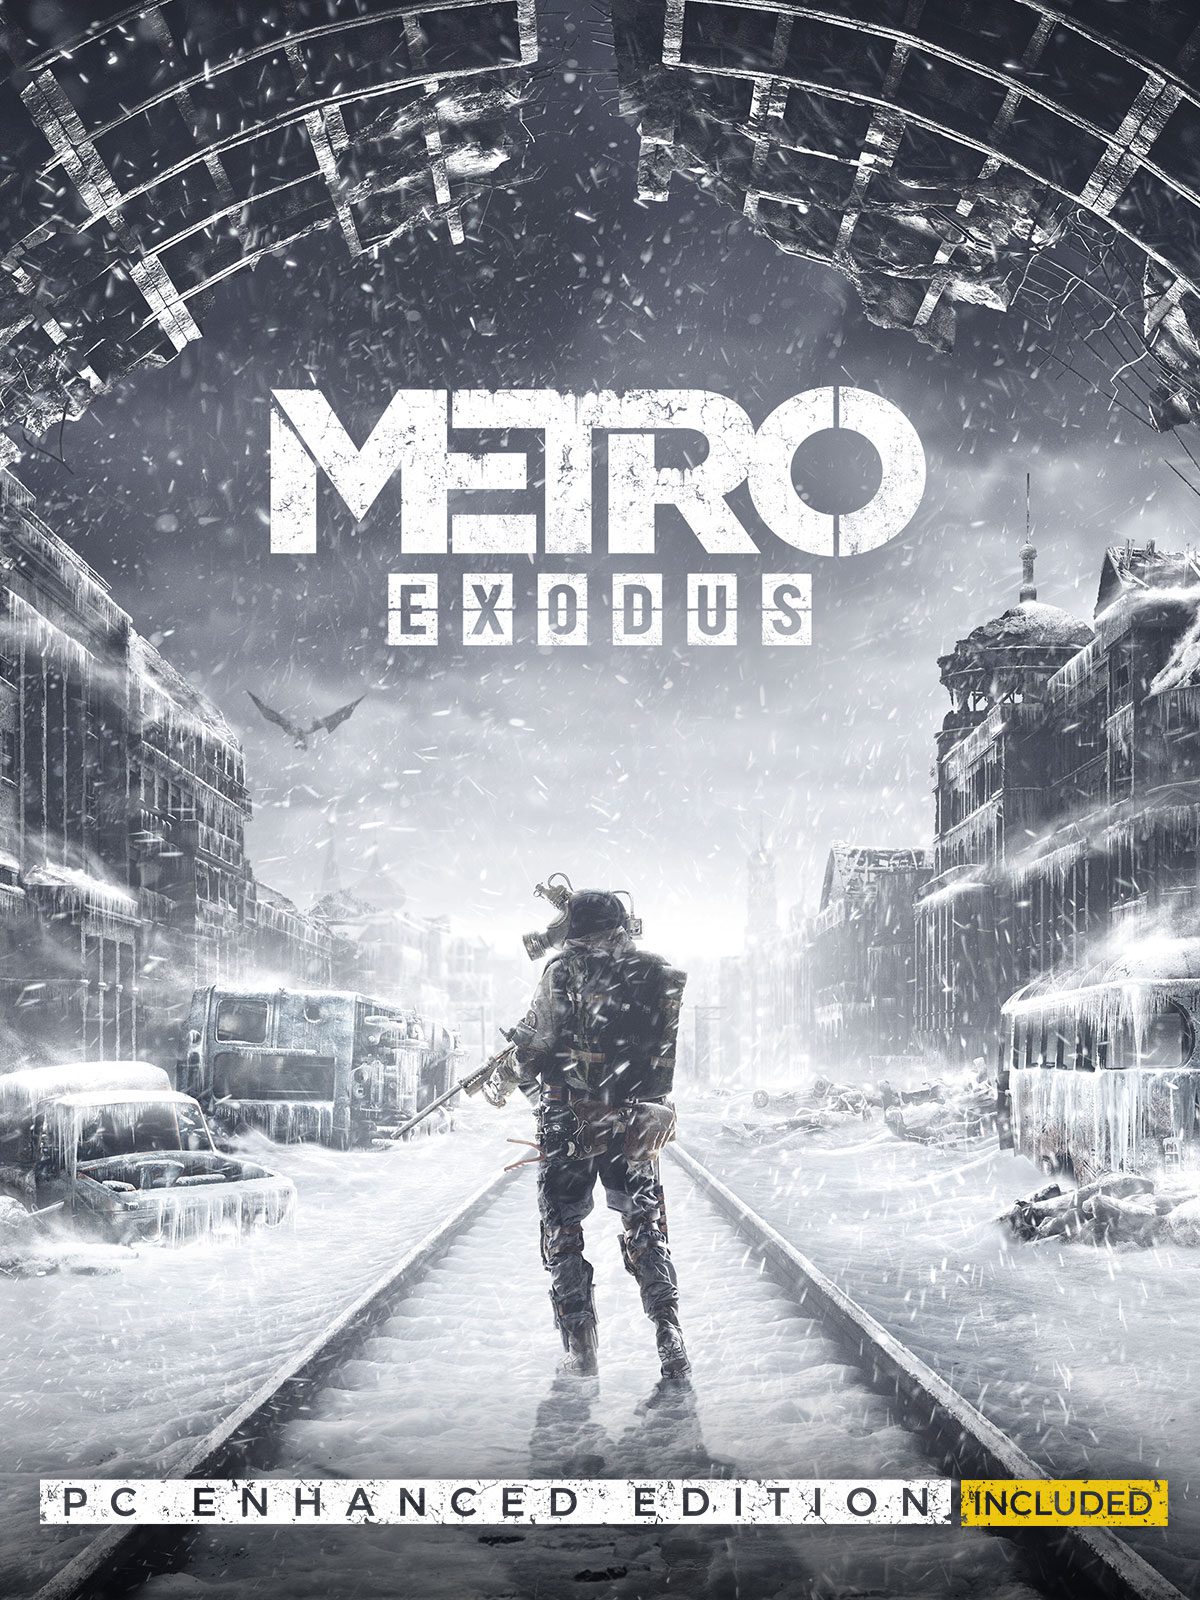 Download Metro Exodus game for pc